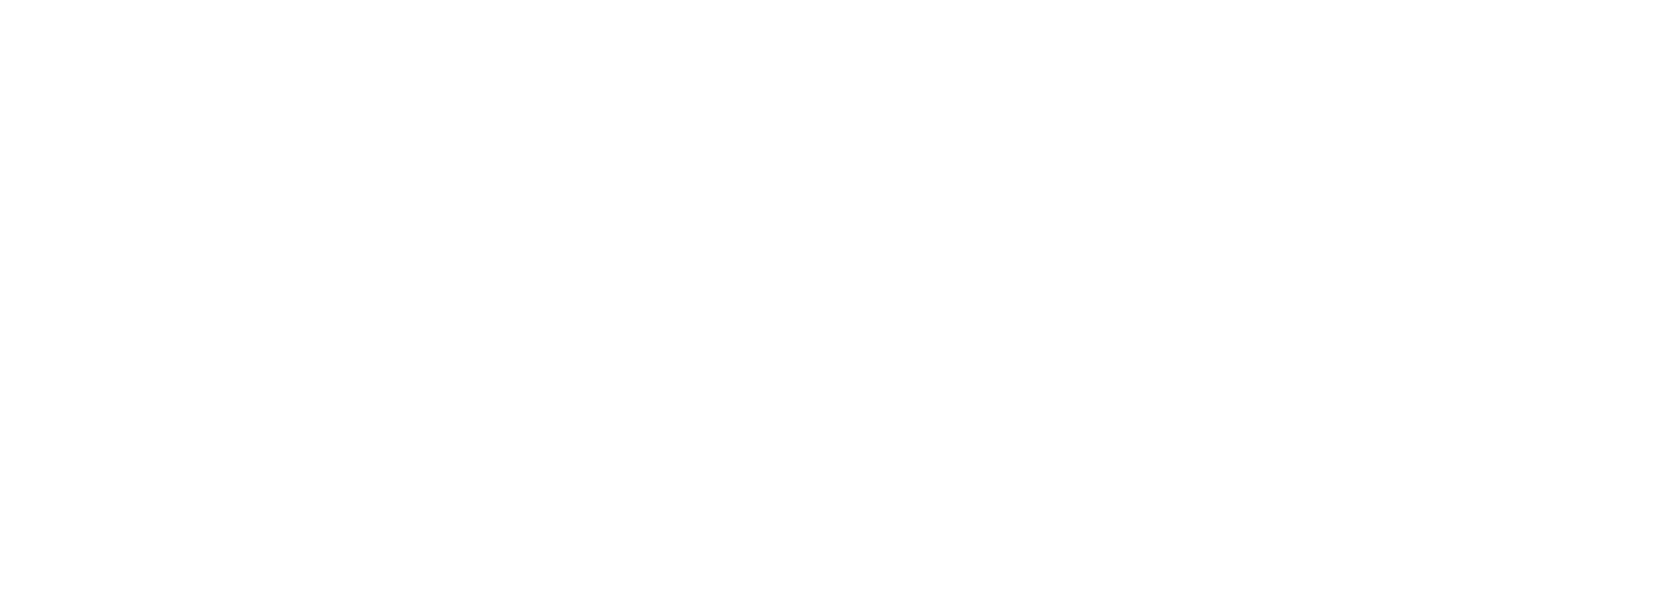 CrazyGames Developer Portal  Publish Unity and HTML5 web games and earn  revenue